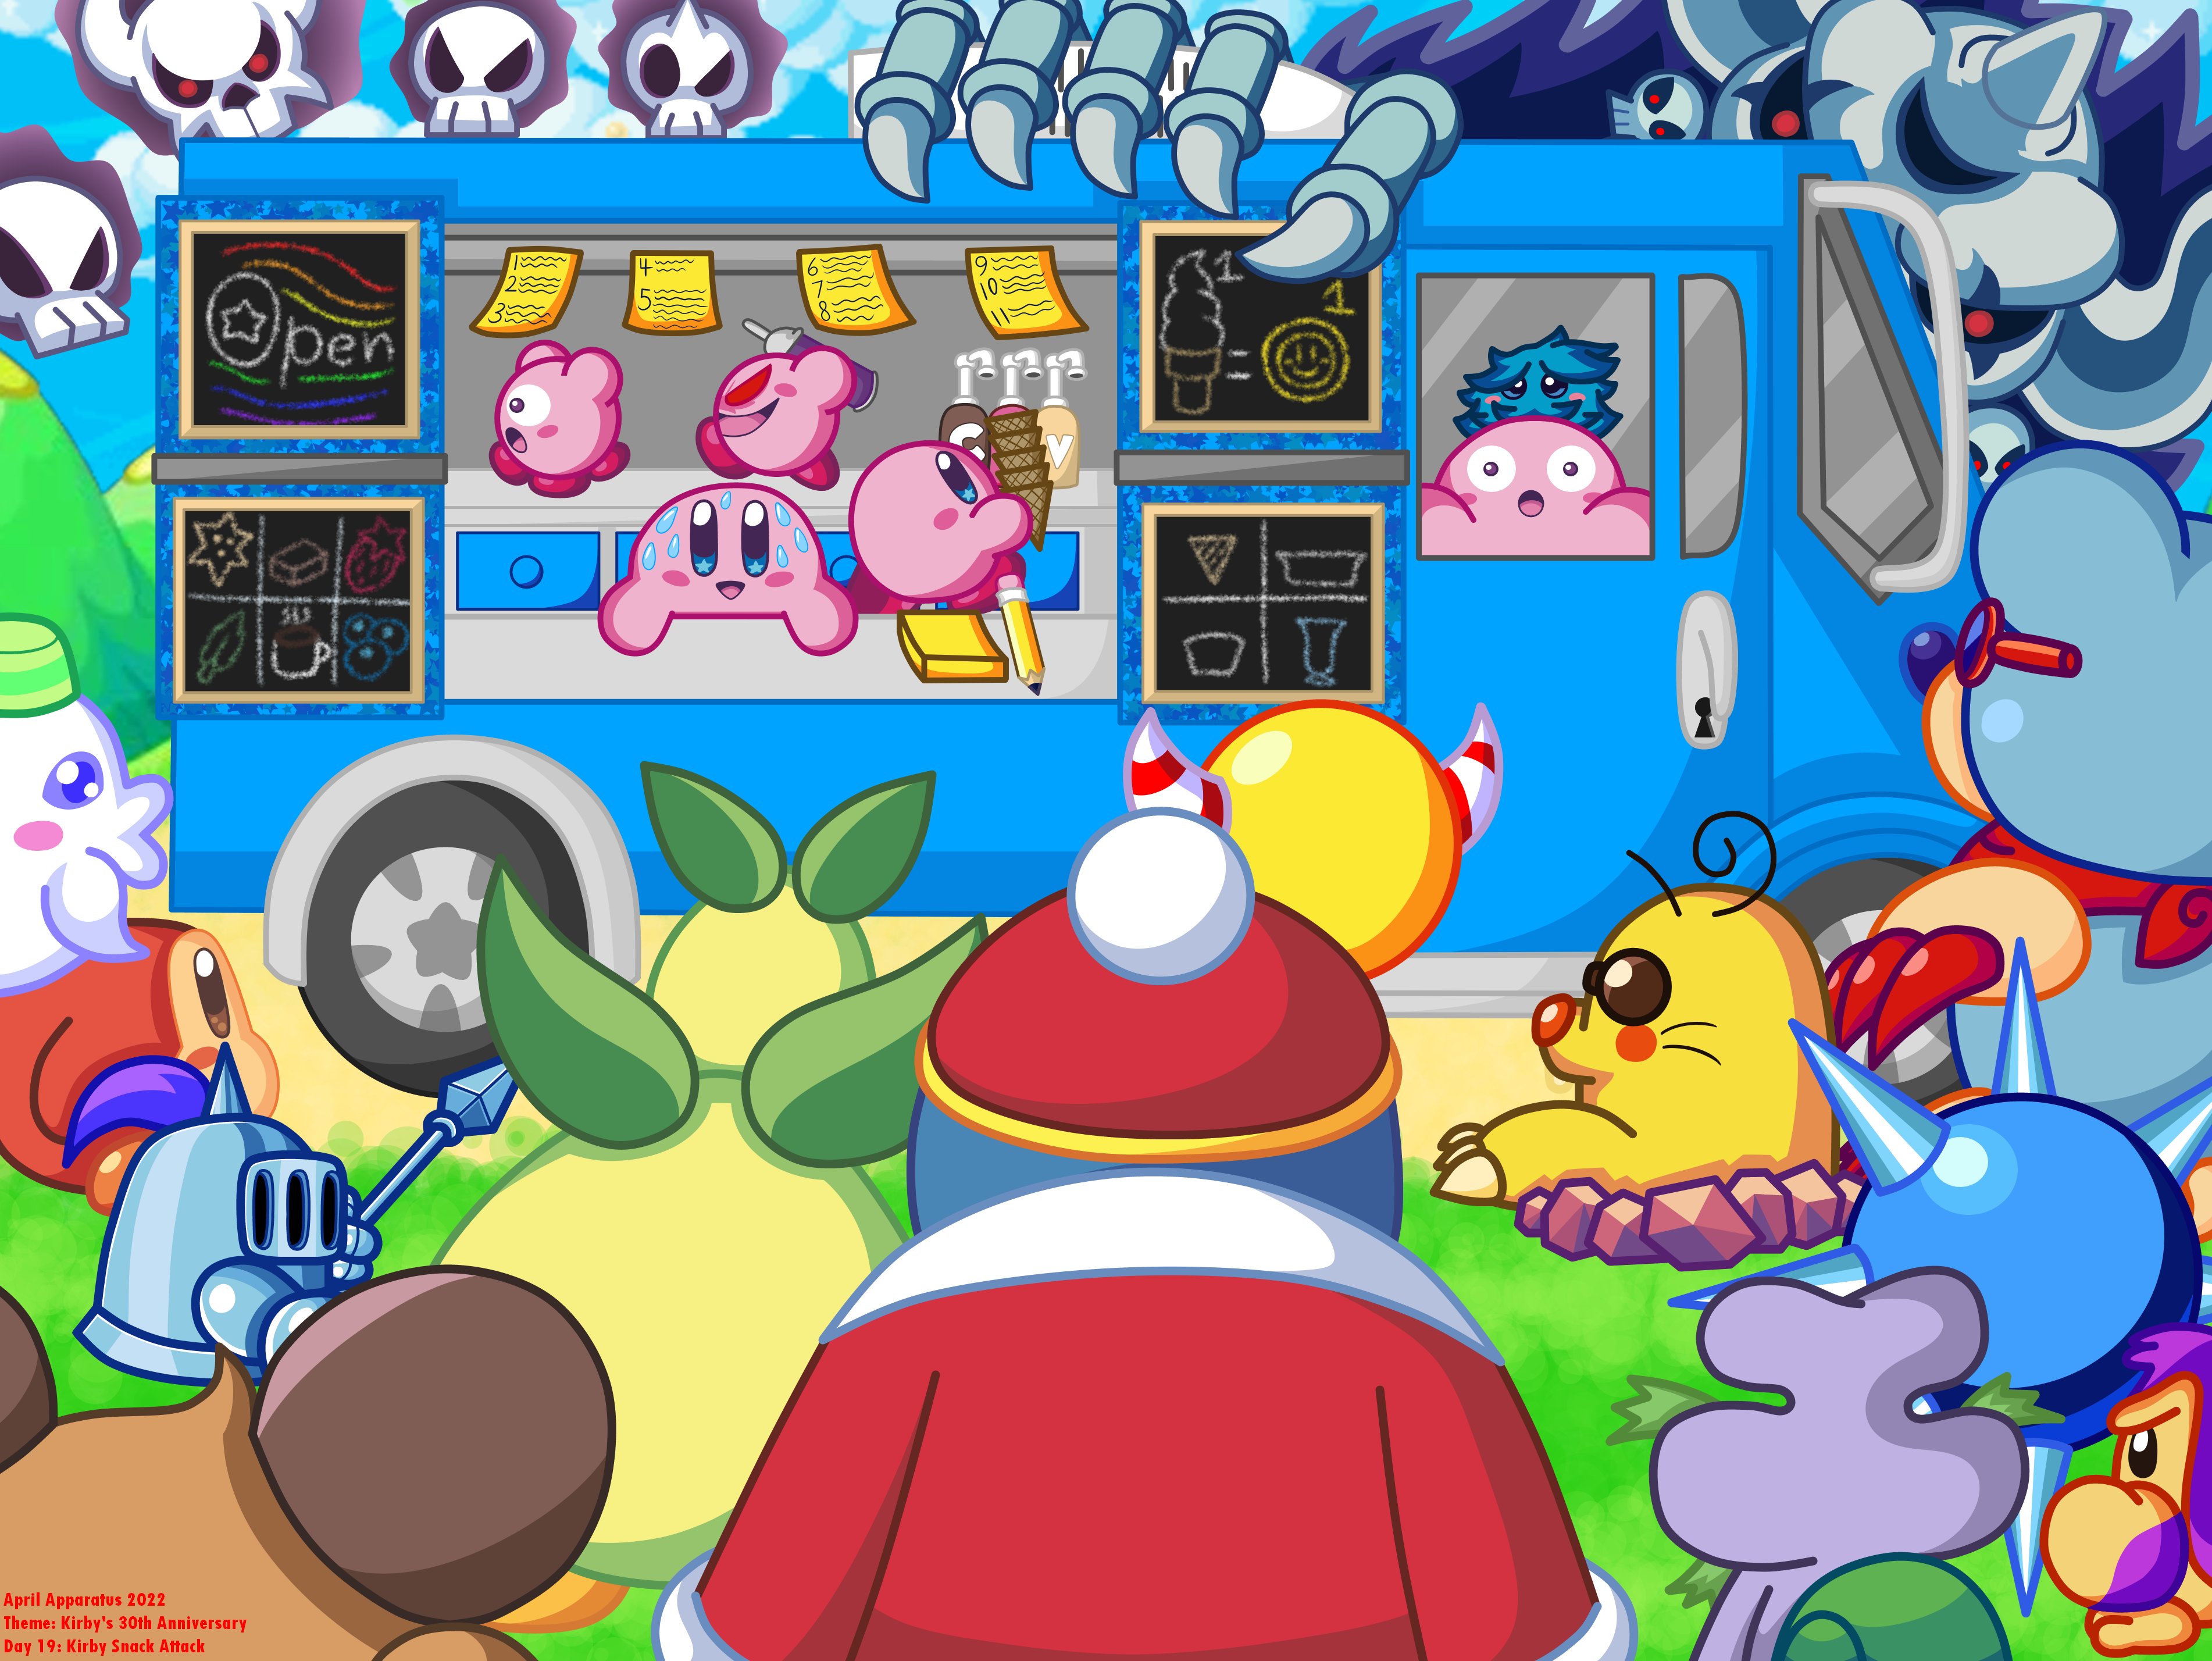 Vol 1: Kirby's NEW Adventure (9) by KenTheNekomata on DeviantArt